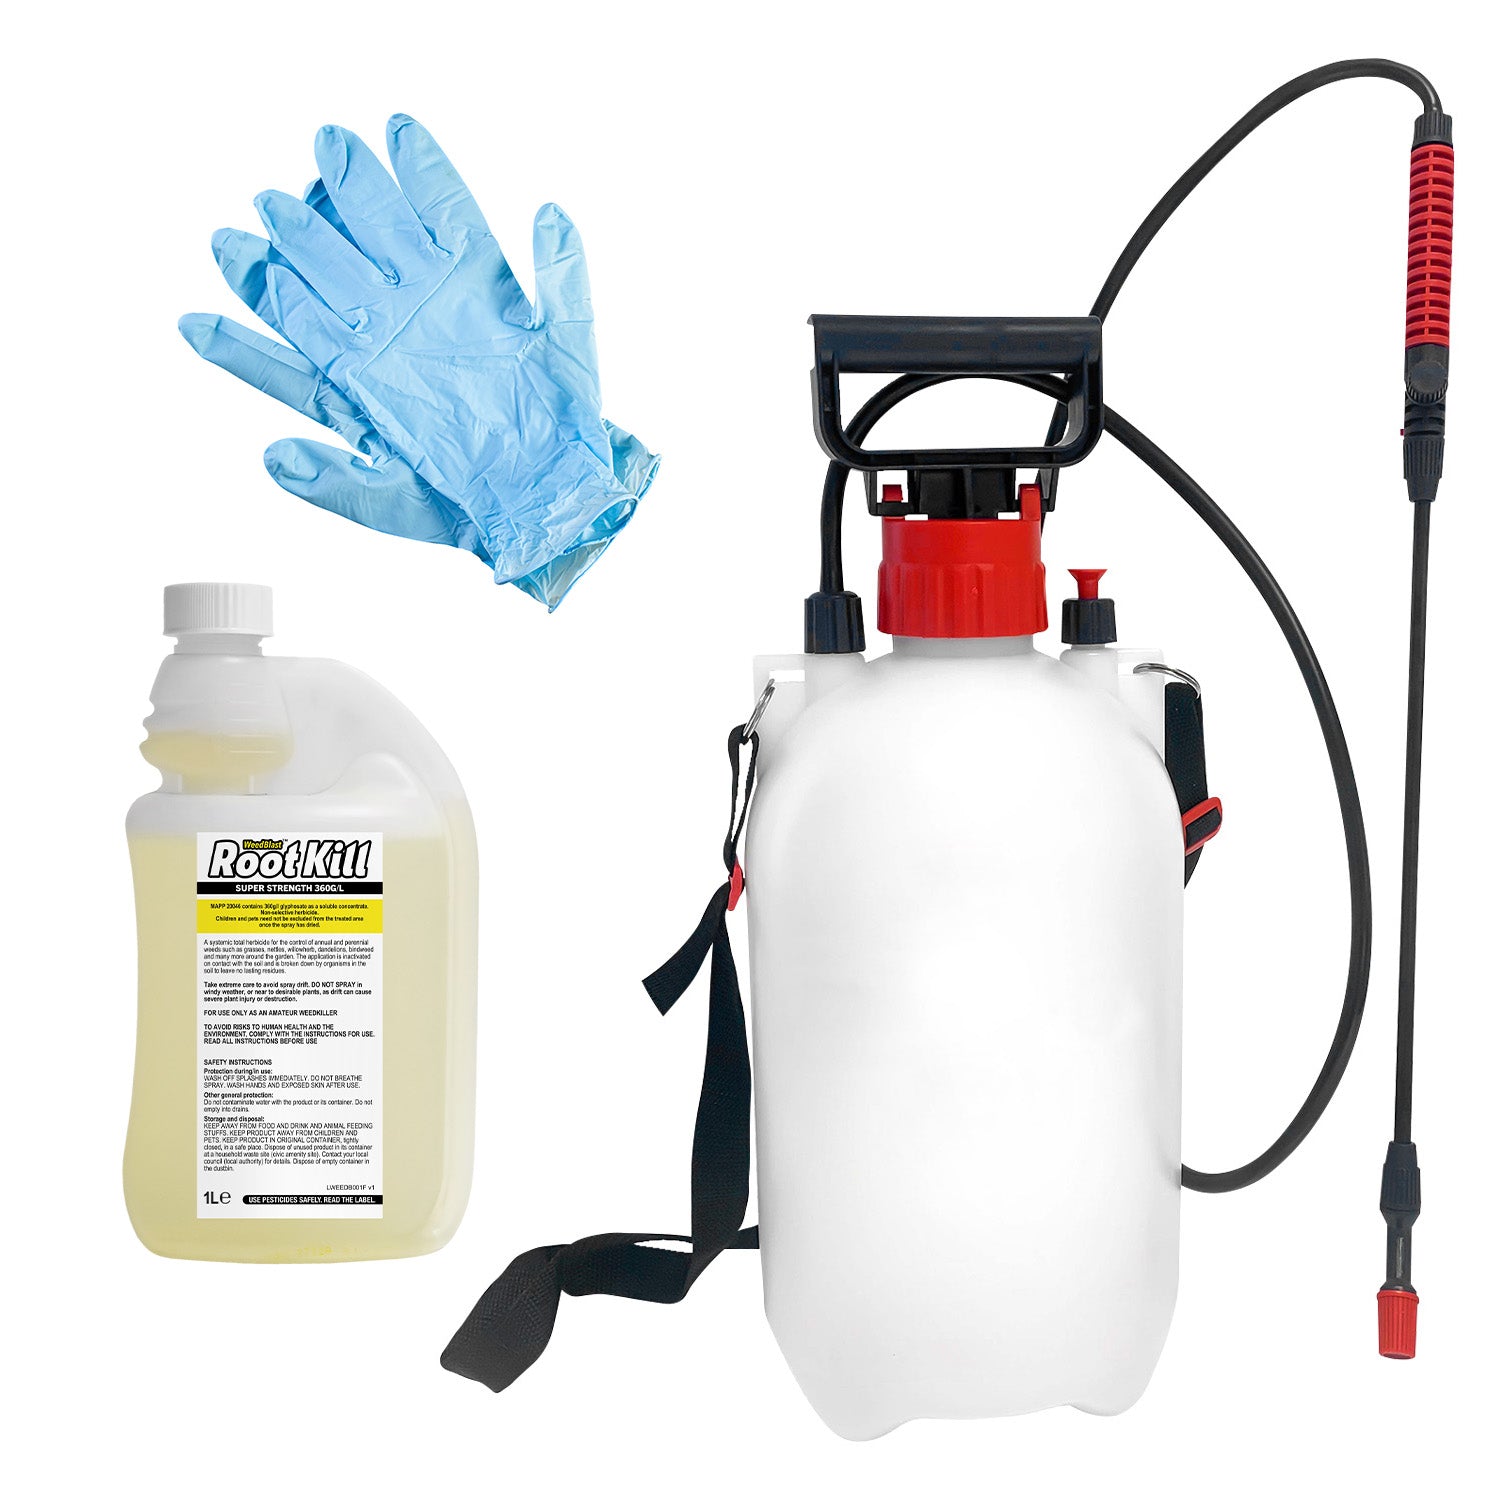 WeedBlast Rootkill Weedkiller 1 Litre 360g/L Glyphosate Concentrate with 5L Garden Sprayer, 2 x Gloves